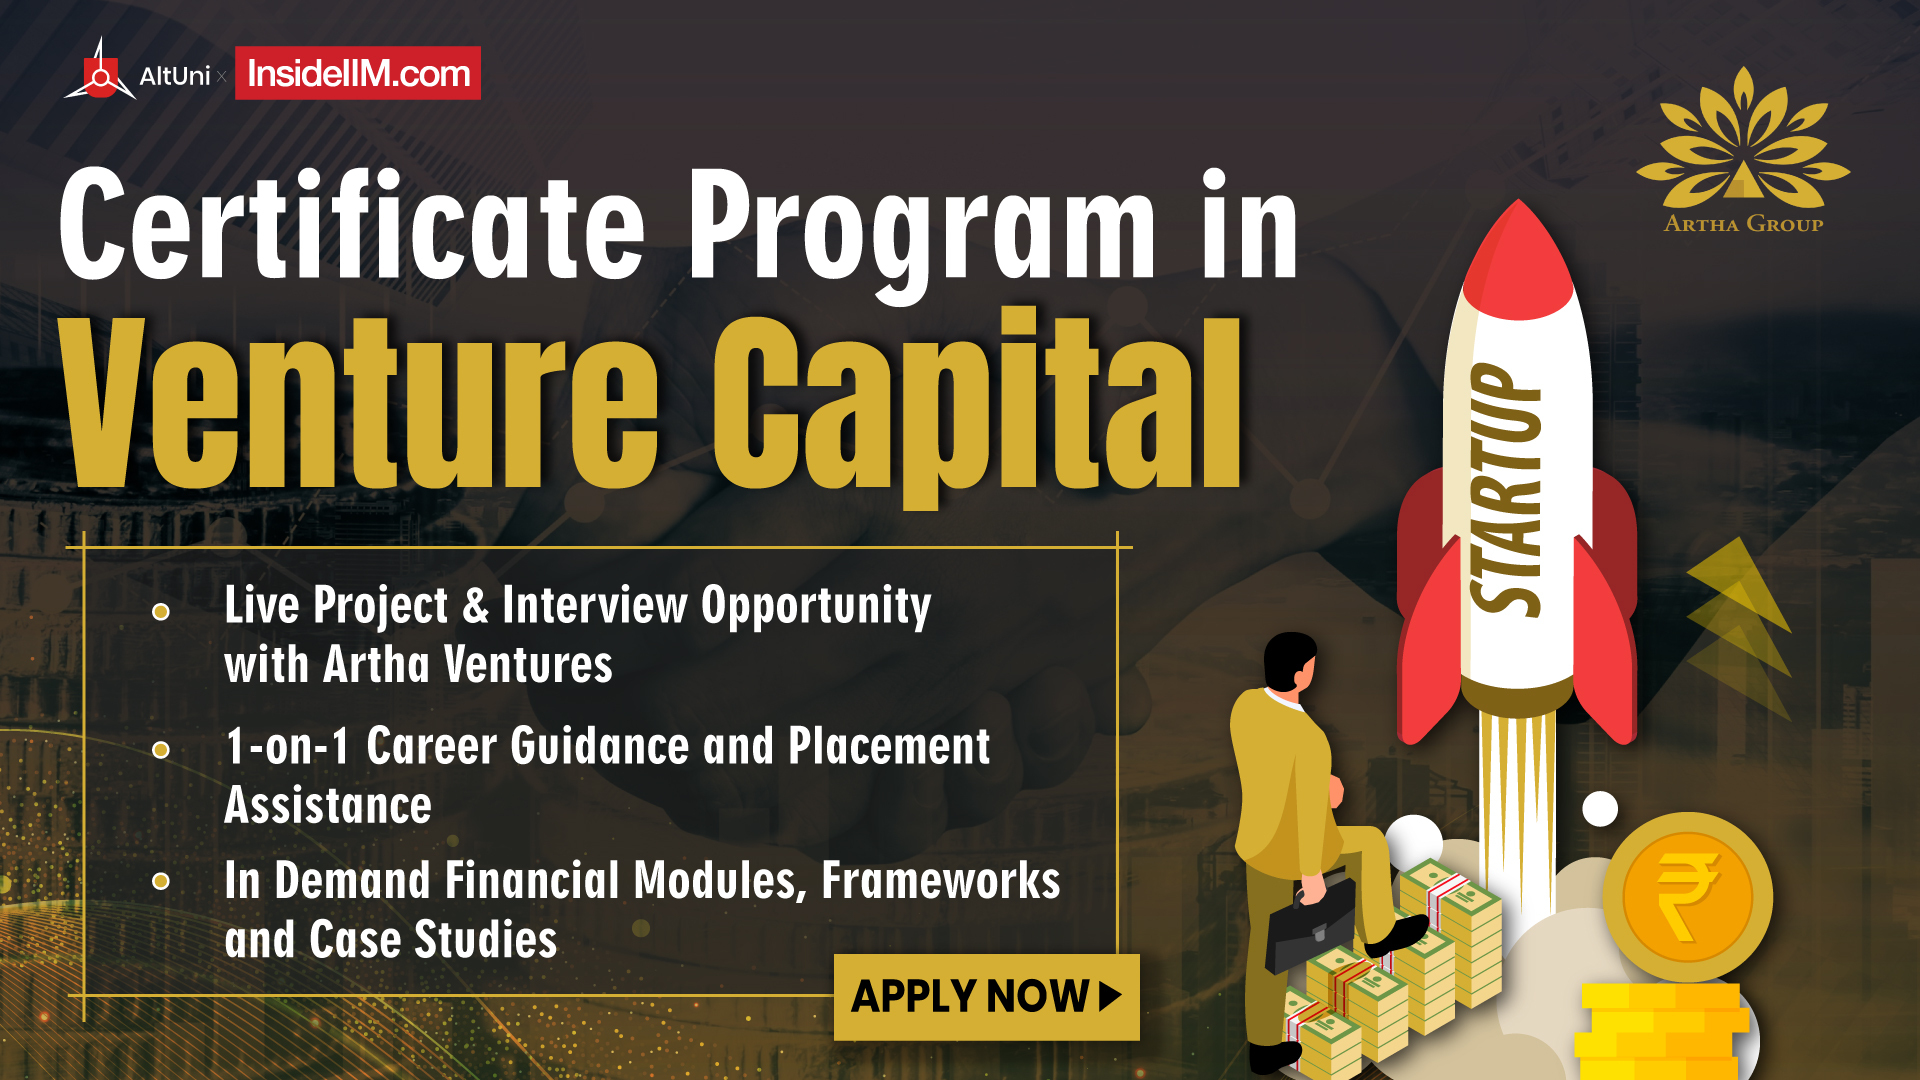 AltUni's Certificate Program In Venture Capital